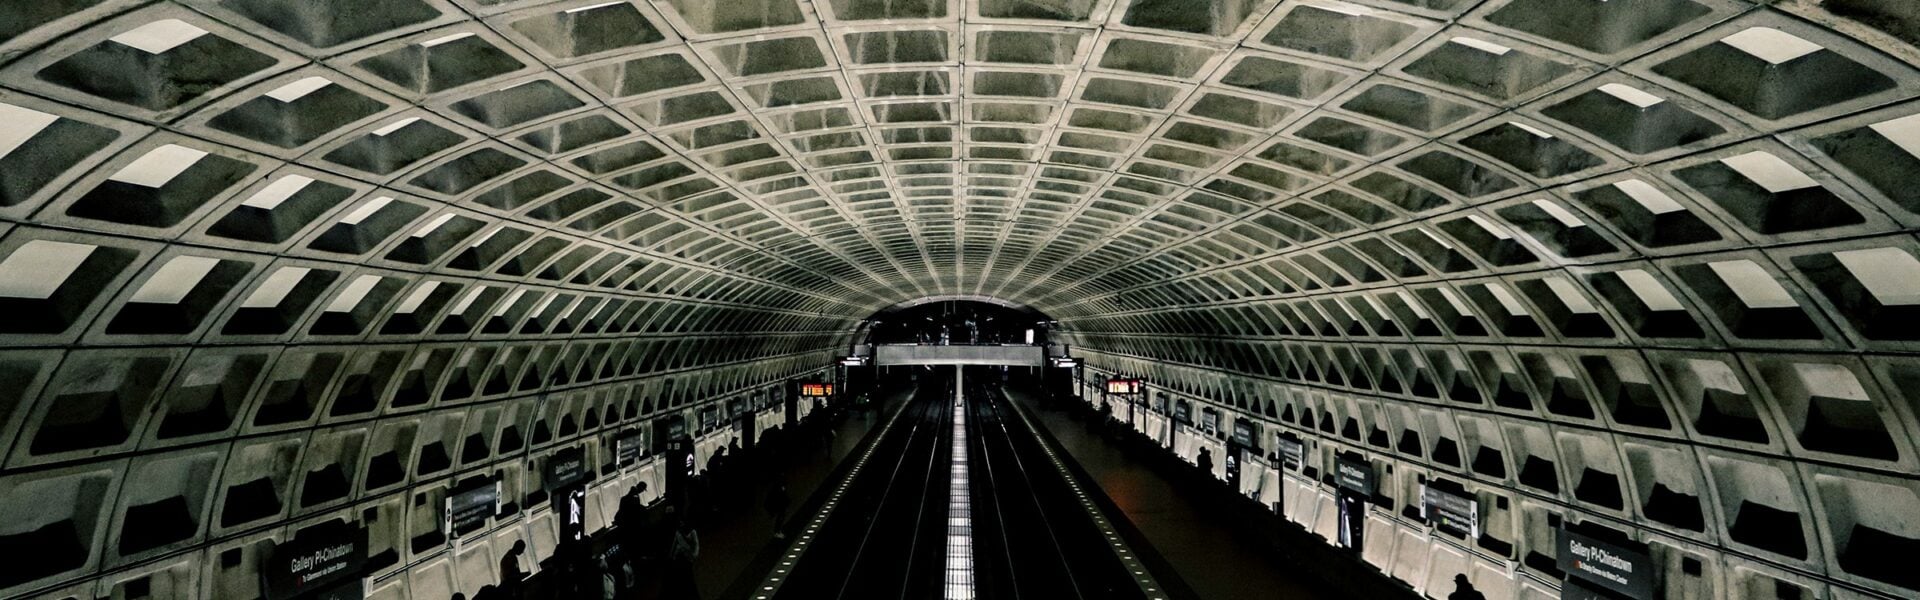 Washington DC metro station